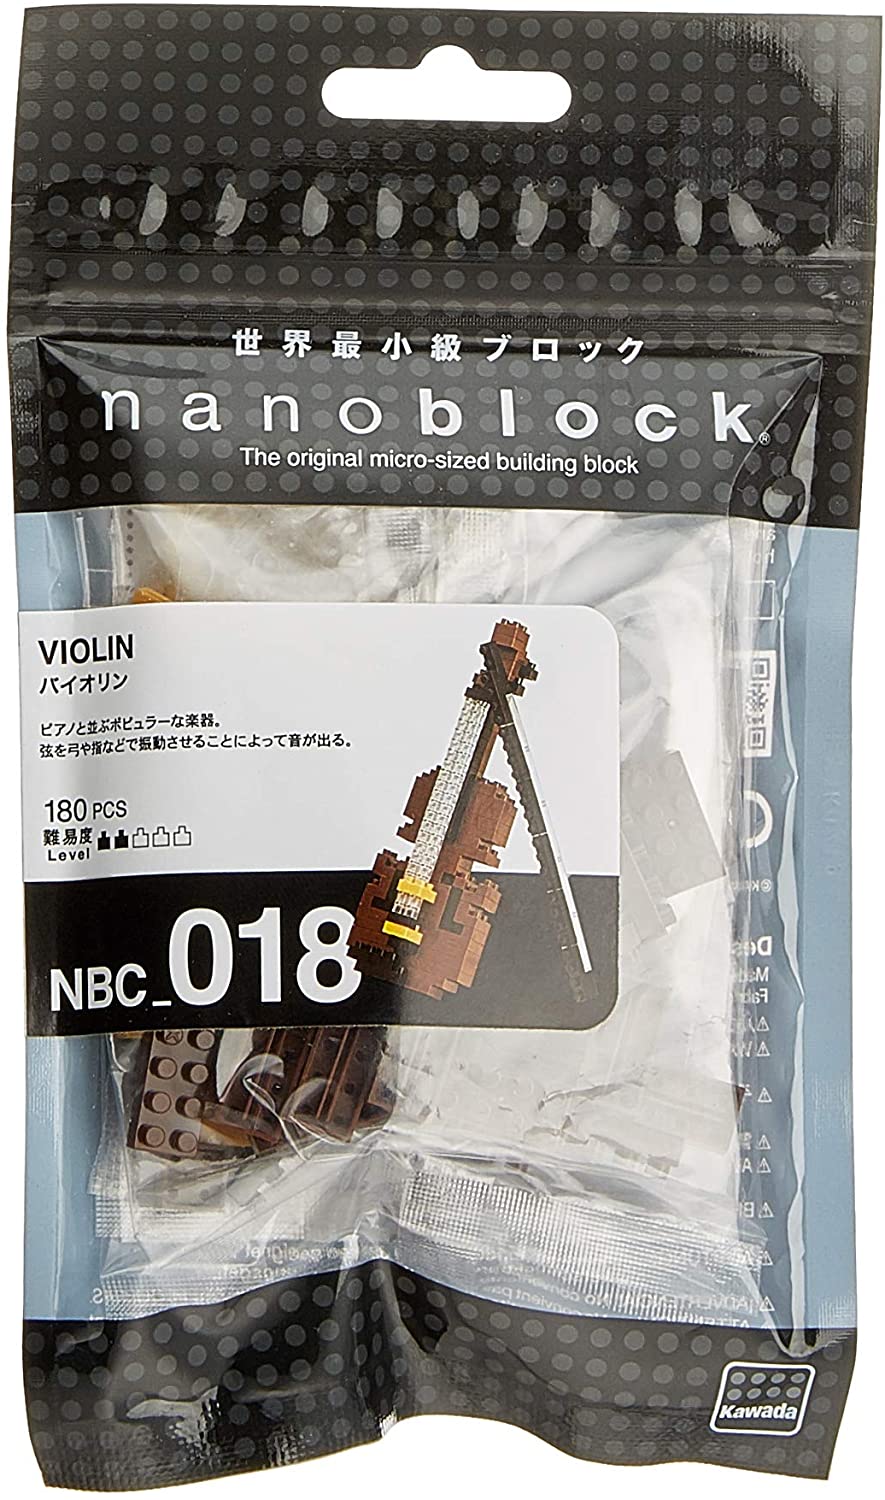 Nanoblock Build Your Own Violin construction set Ideal Stocking Filler 